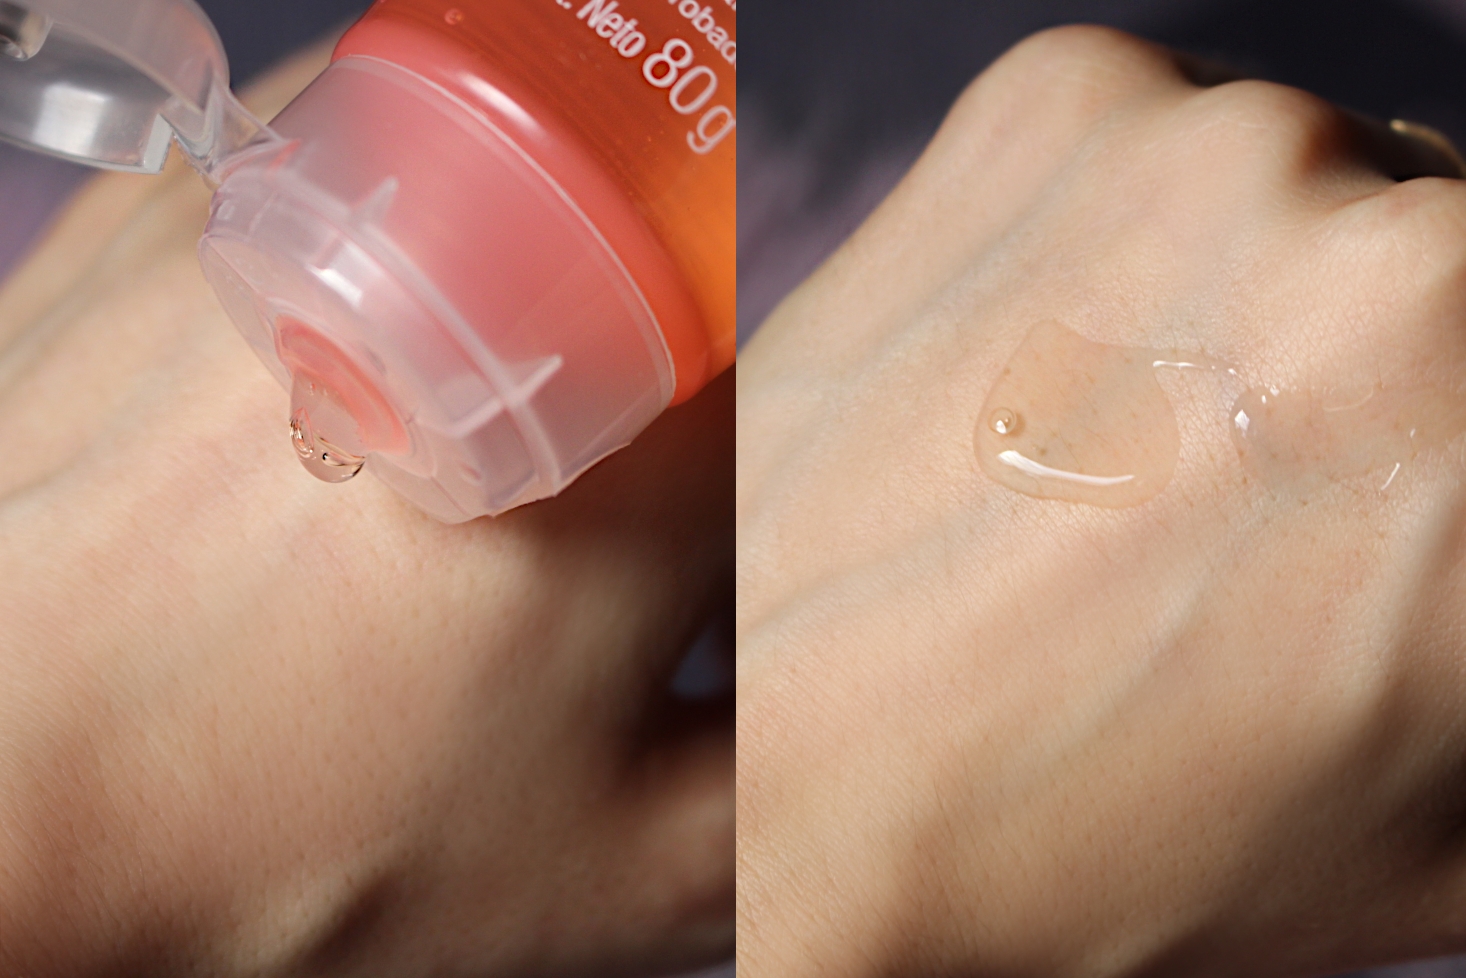 demonstration of Neutrogena face wash gel texture